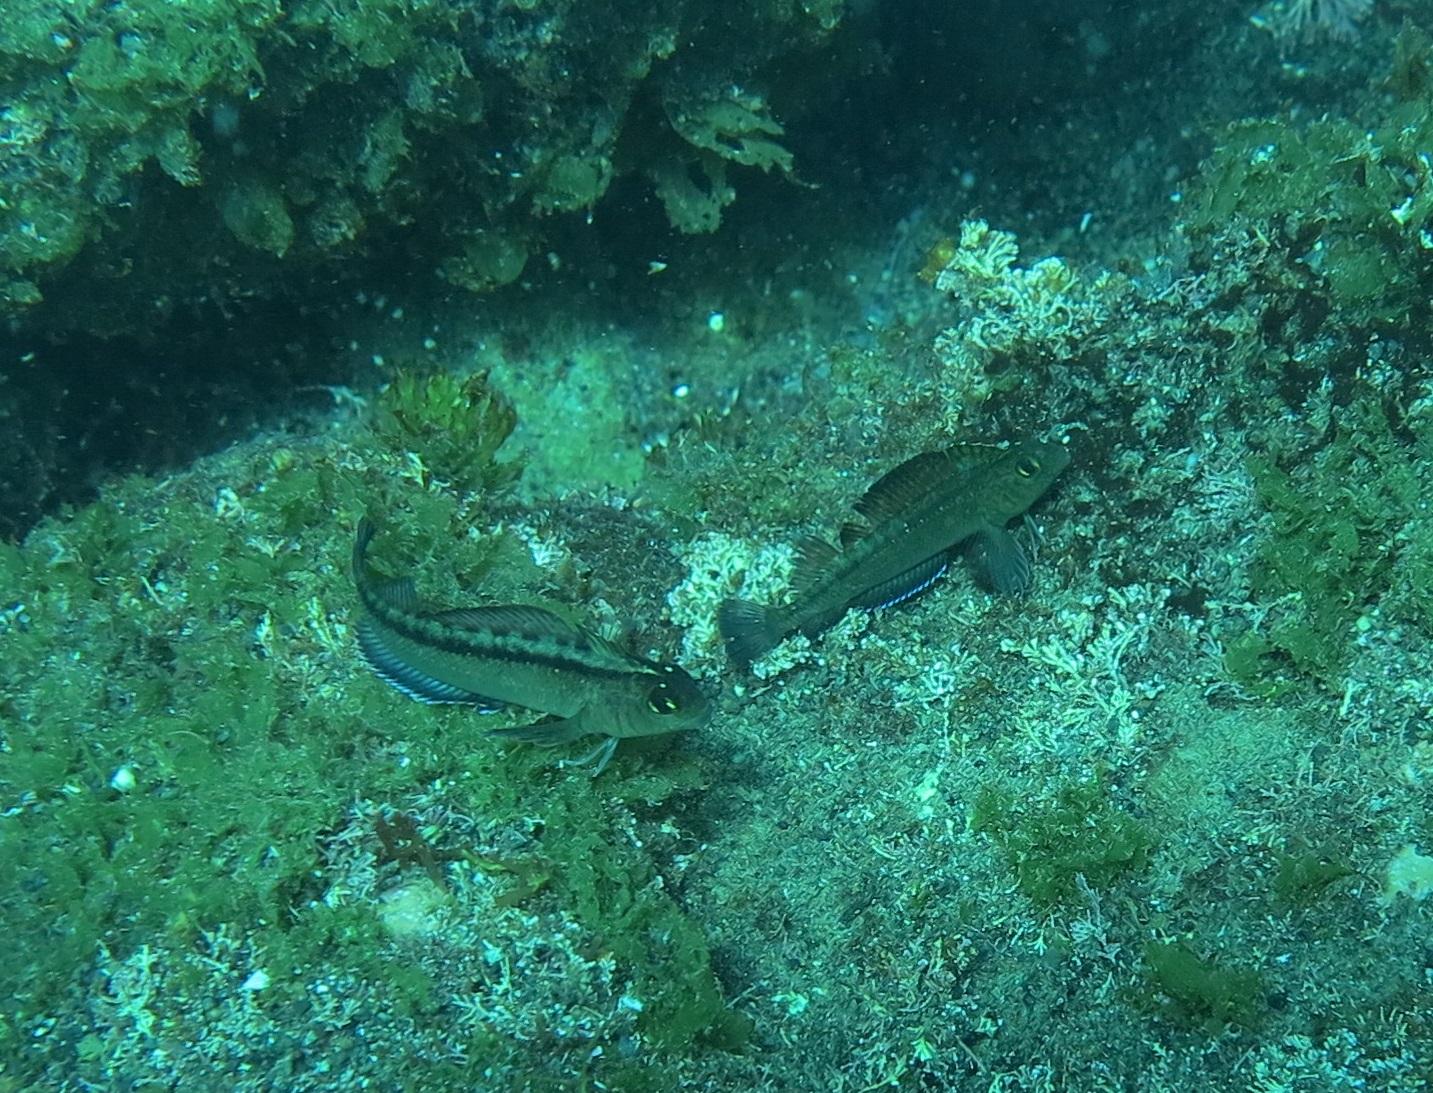 Triplefin fish near underwater vent